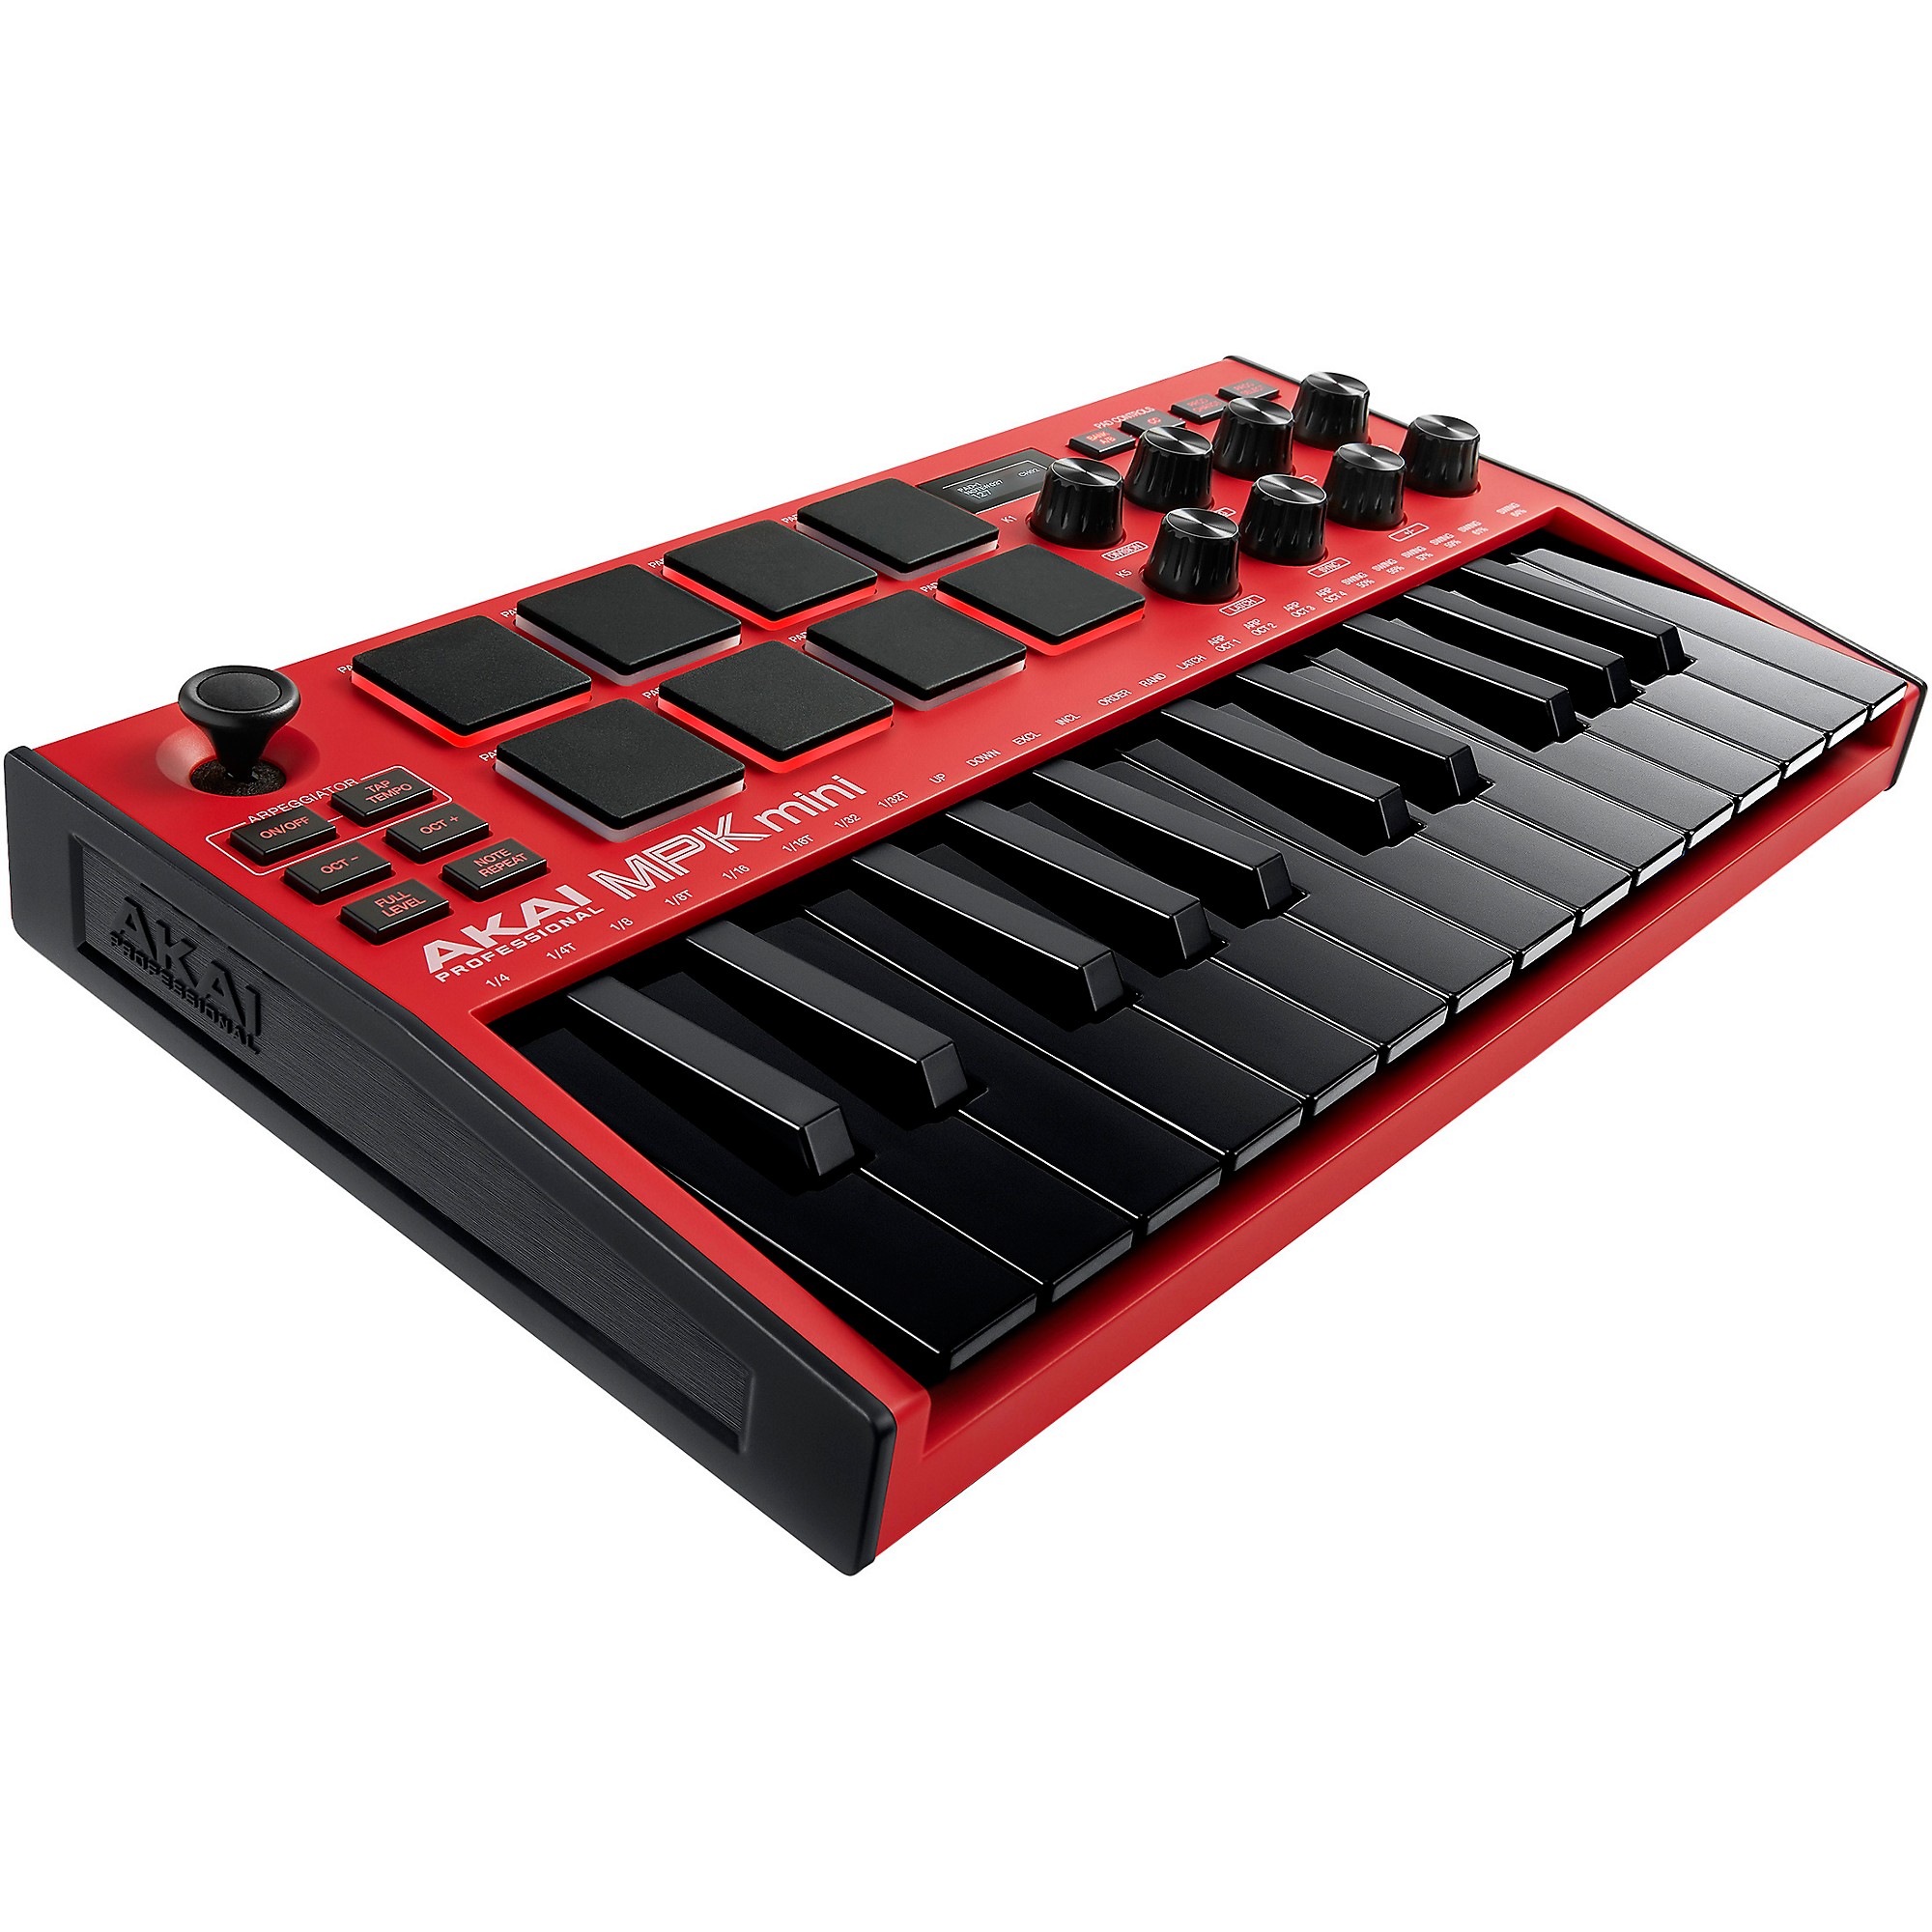 Akai Professional MPK mini mk3 Keyboard Controller Red | Guitar Center